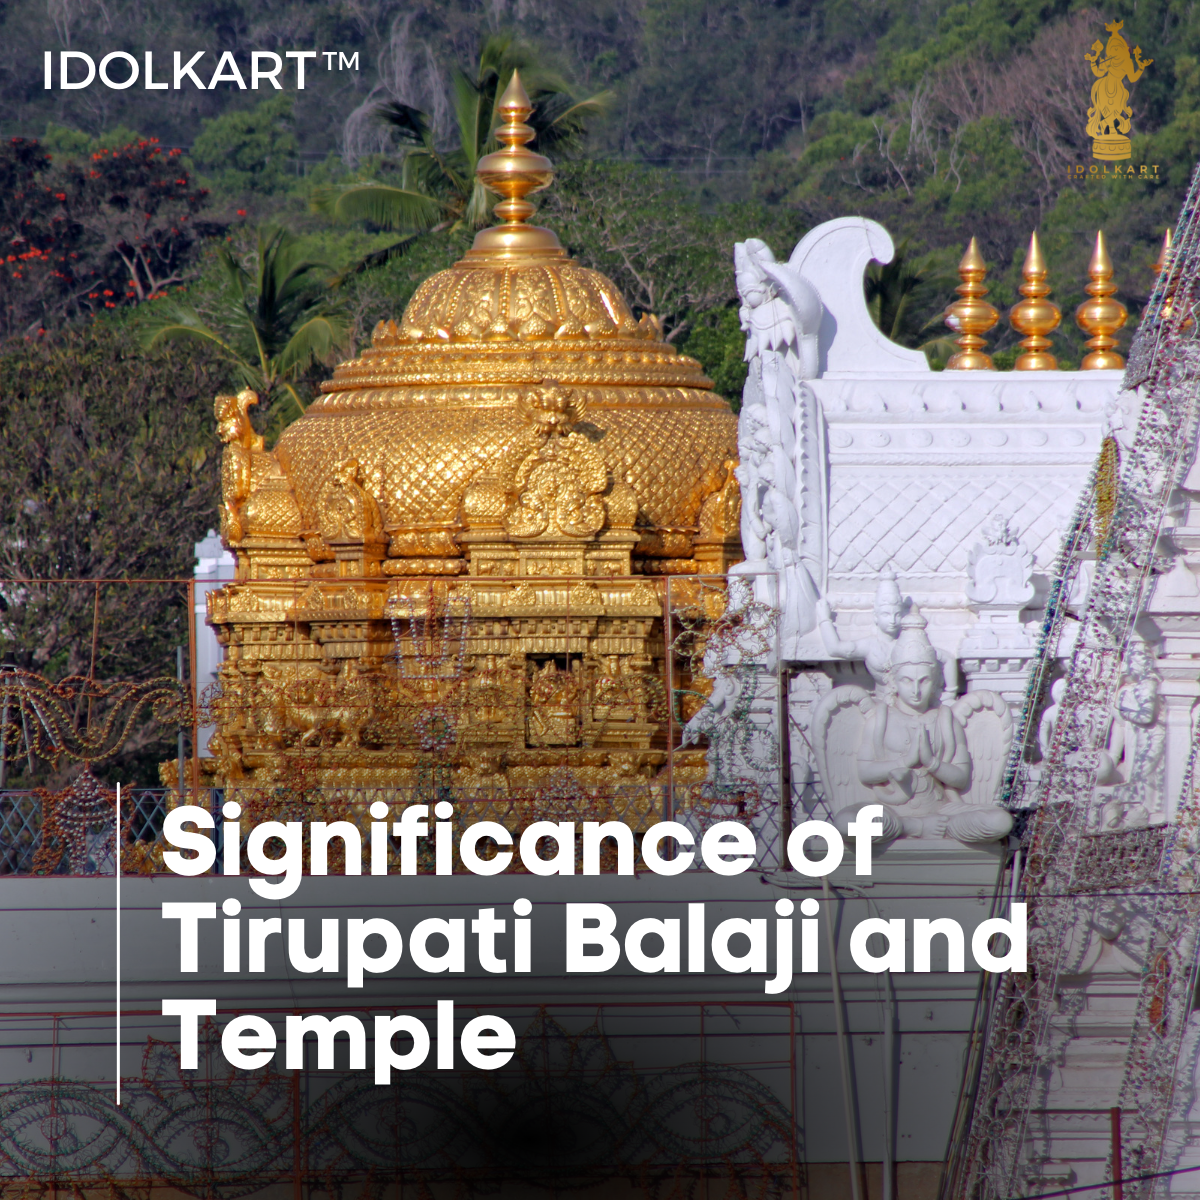 Significance of Tirupati Balaji and Temple